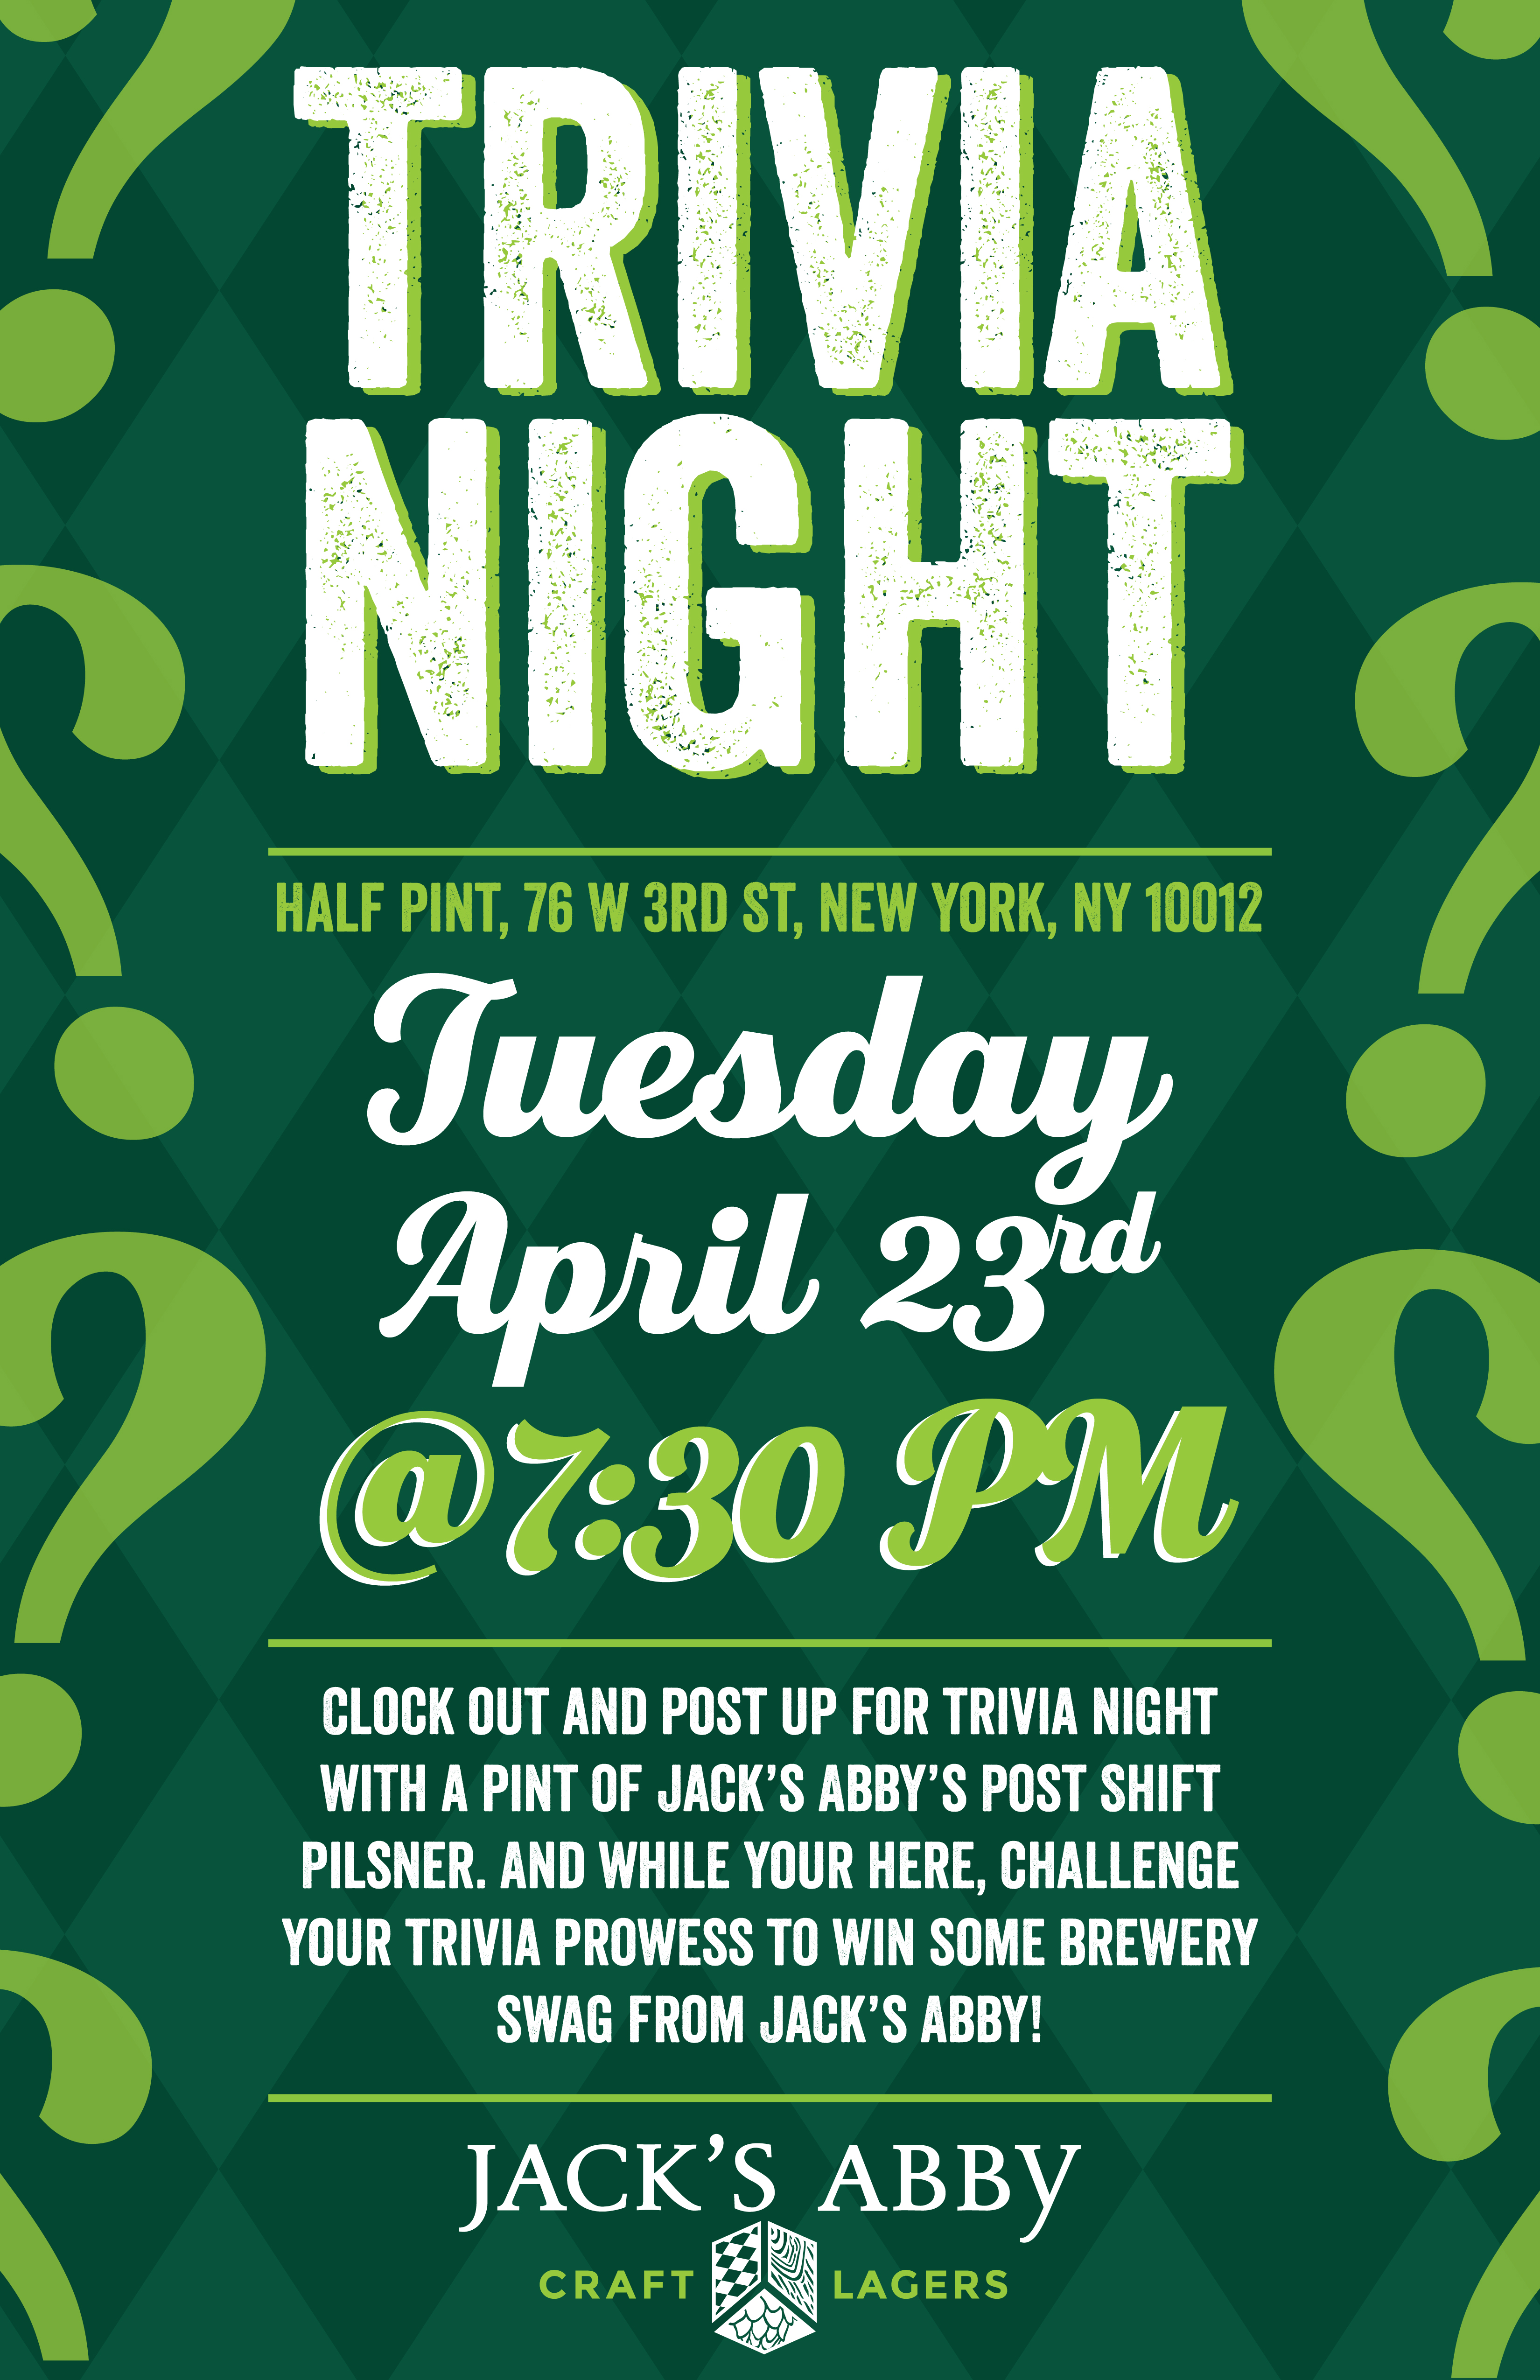 Trivia Night at Half Pint | Jack's Abby